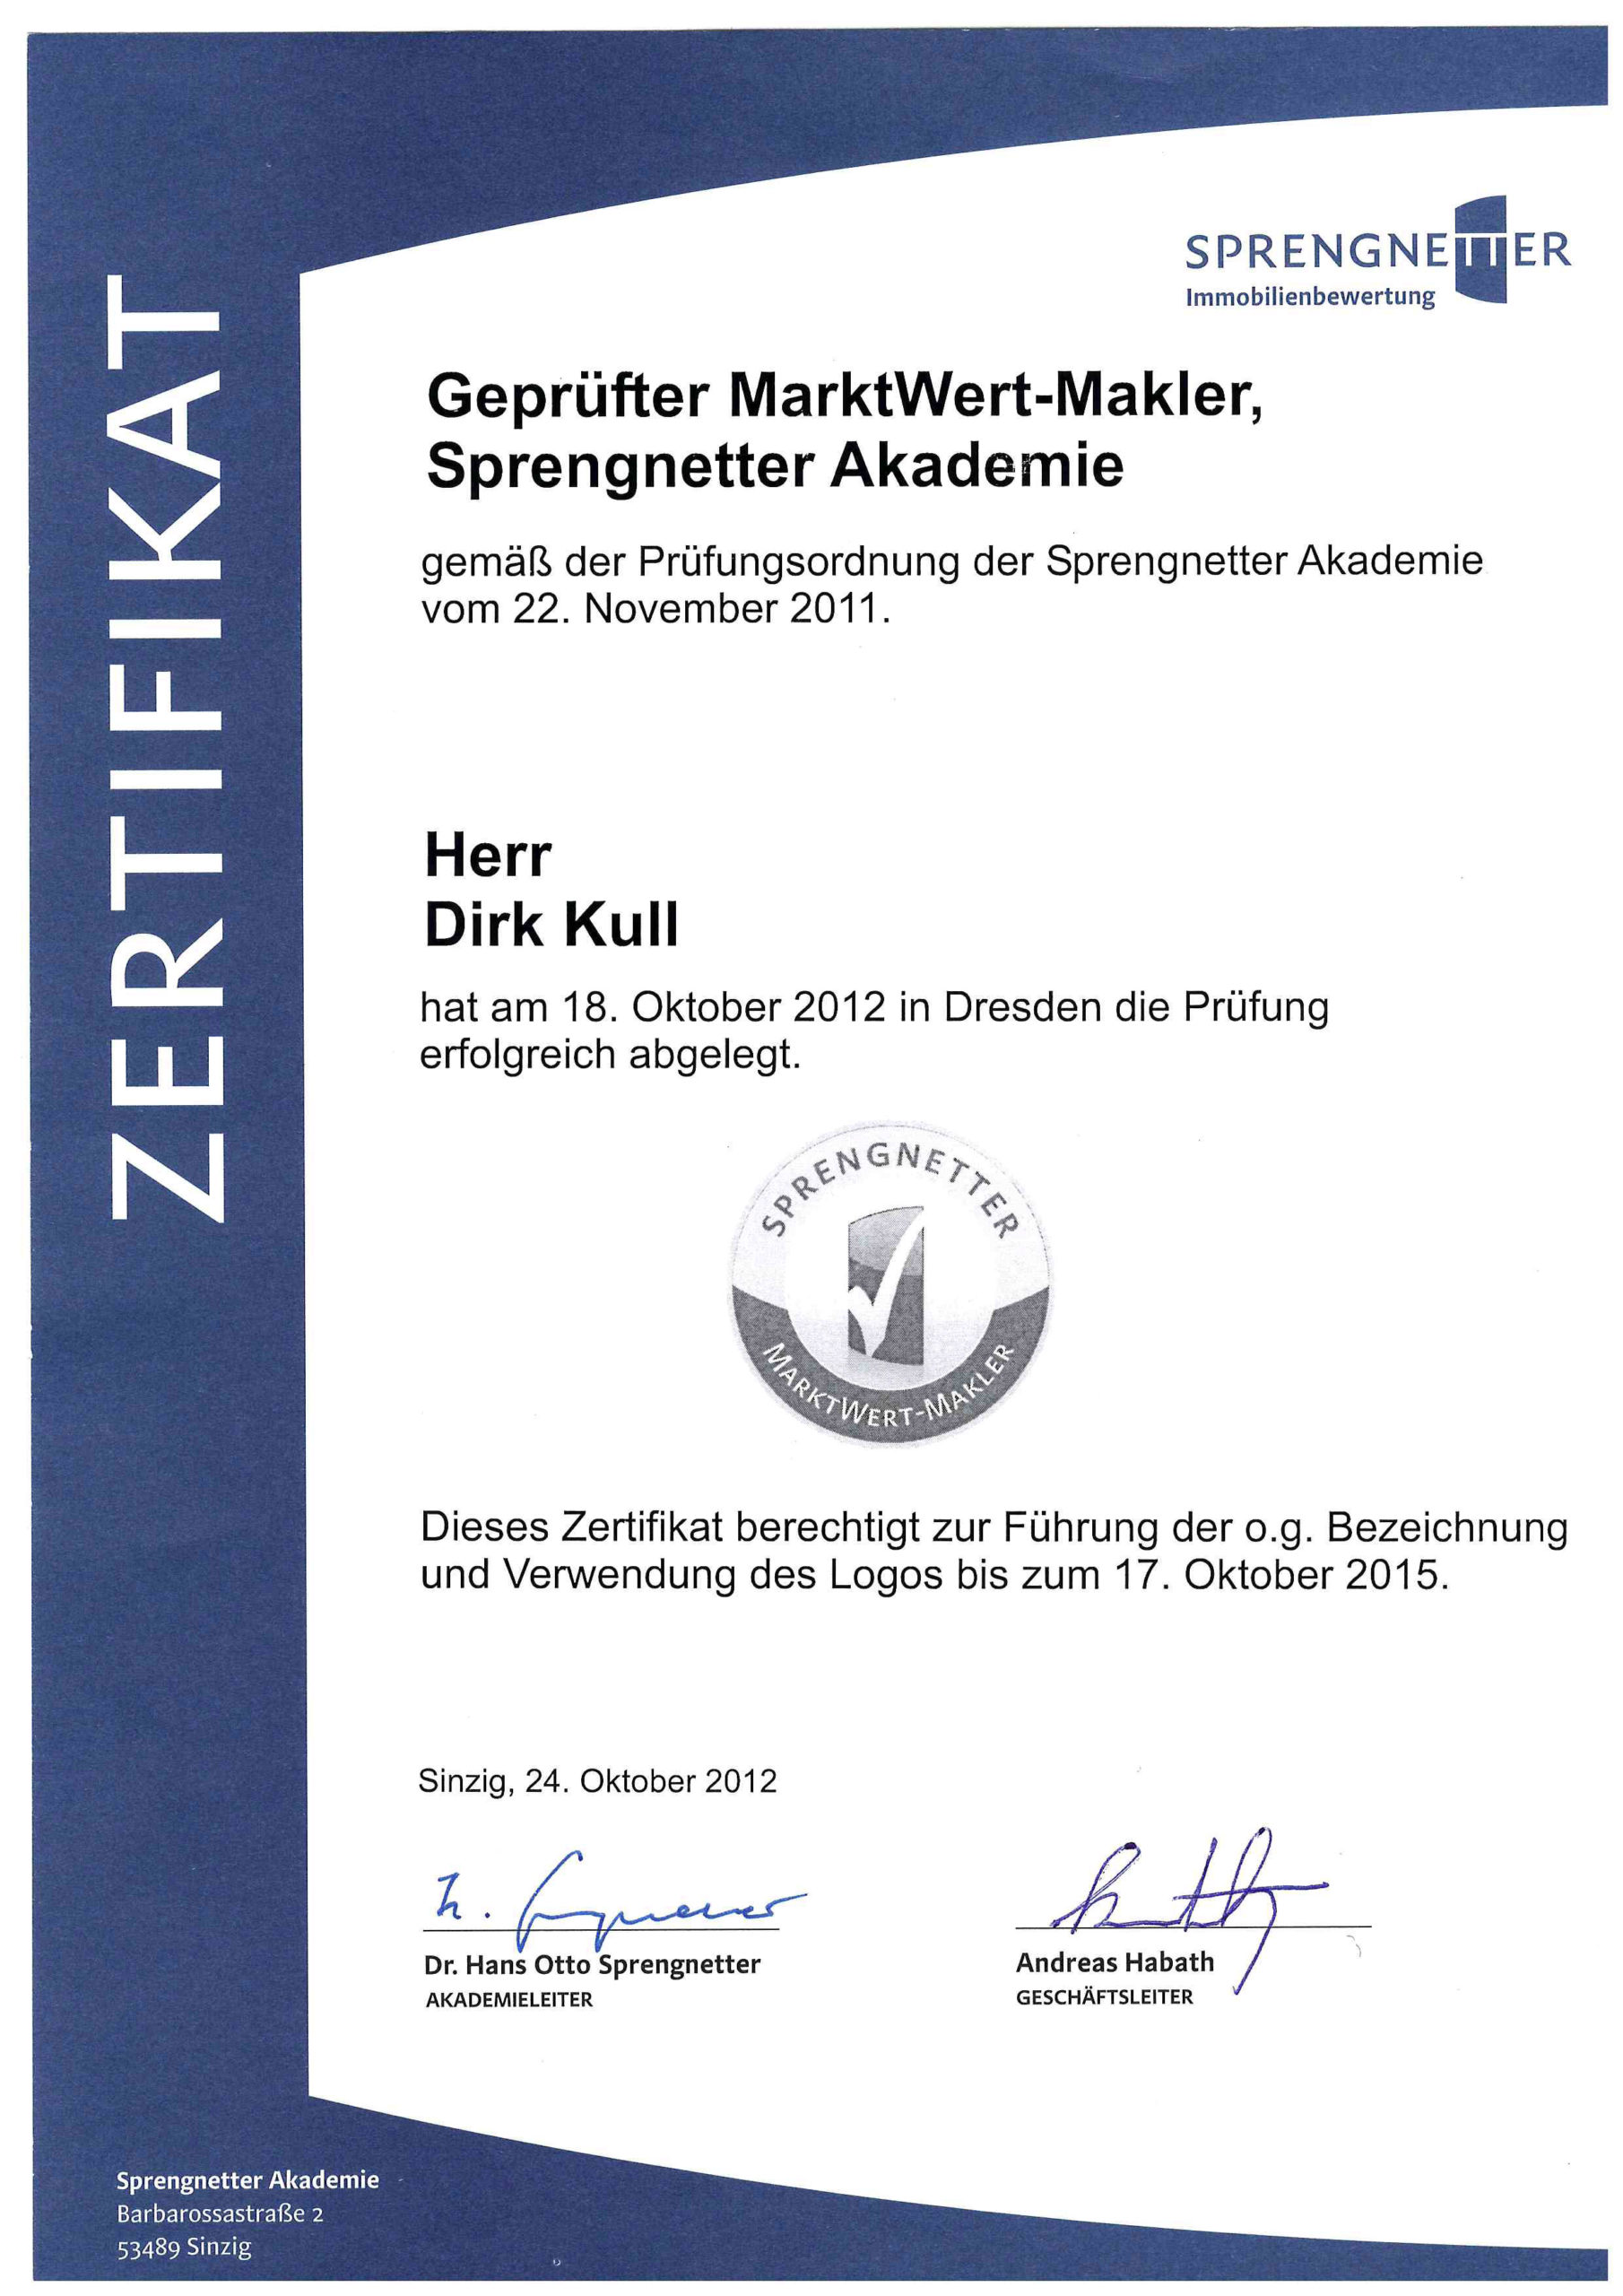 Marktwert Makler, zertifikat Dirk Kull